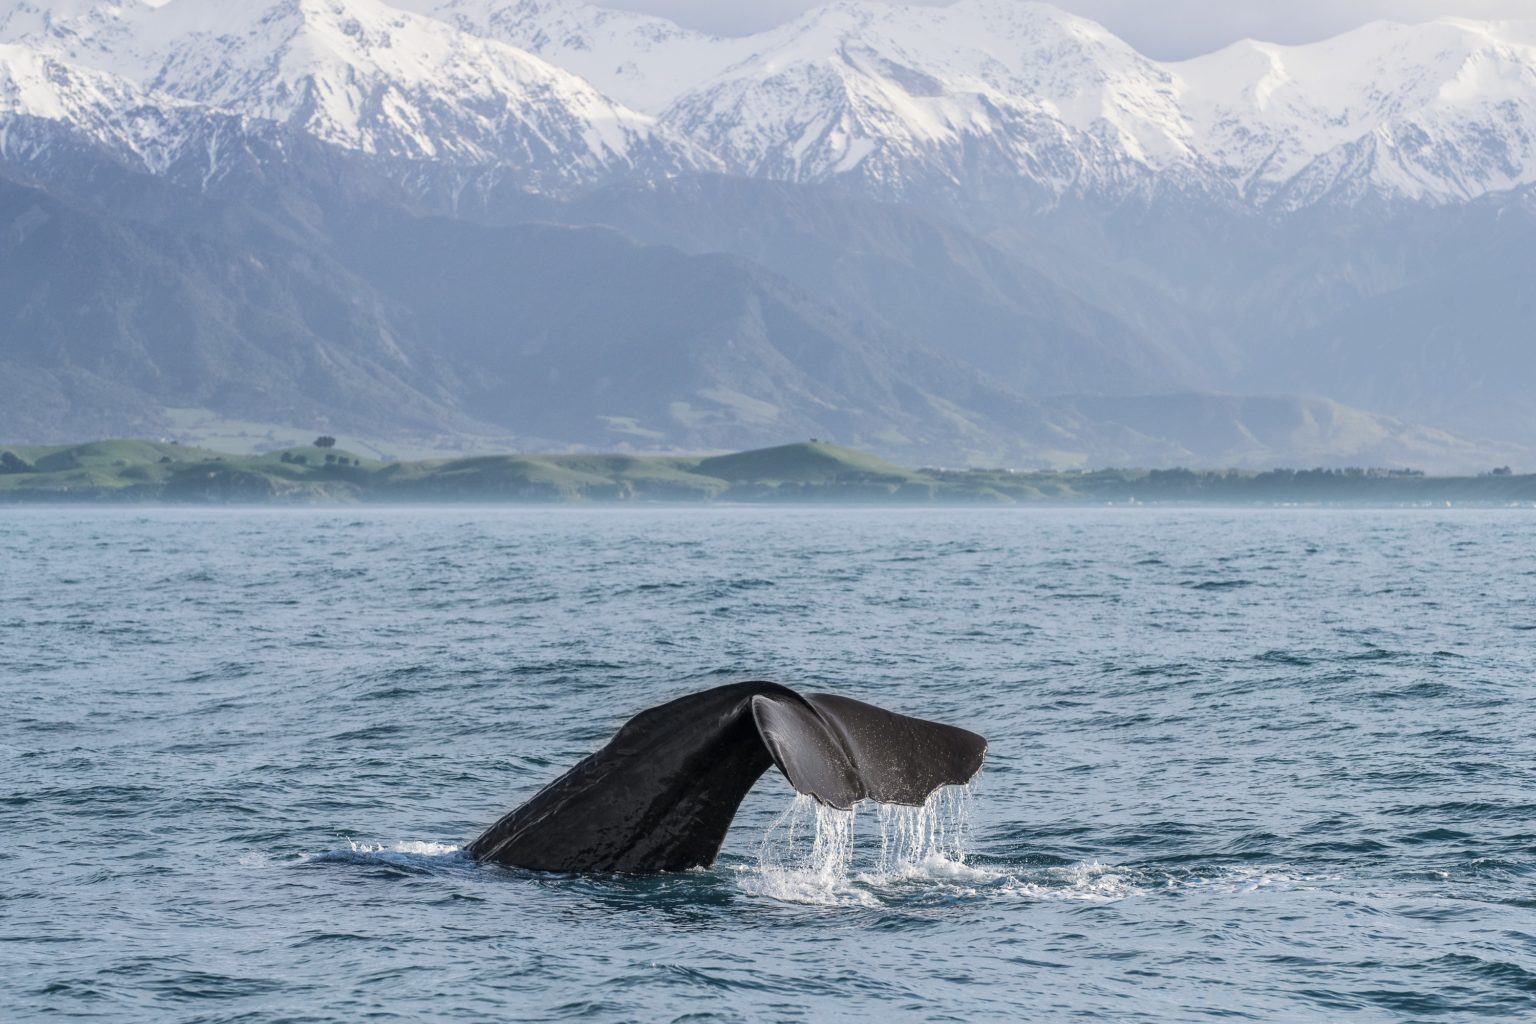 whale tale off the coast of kaikoura